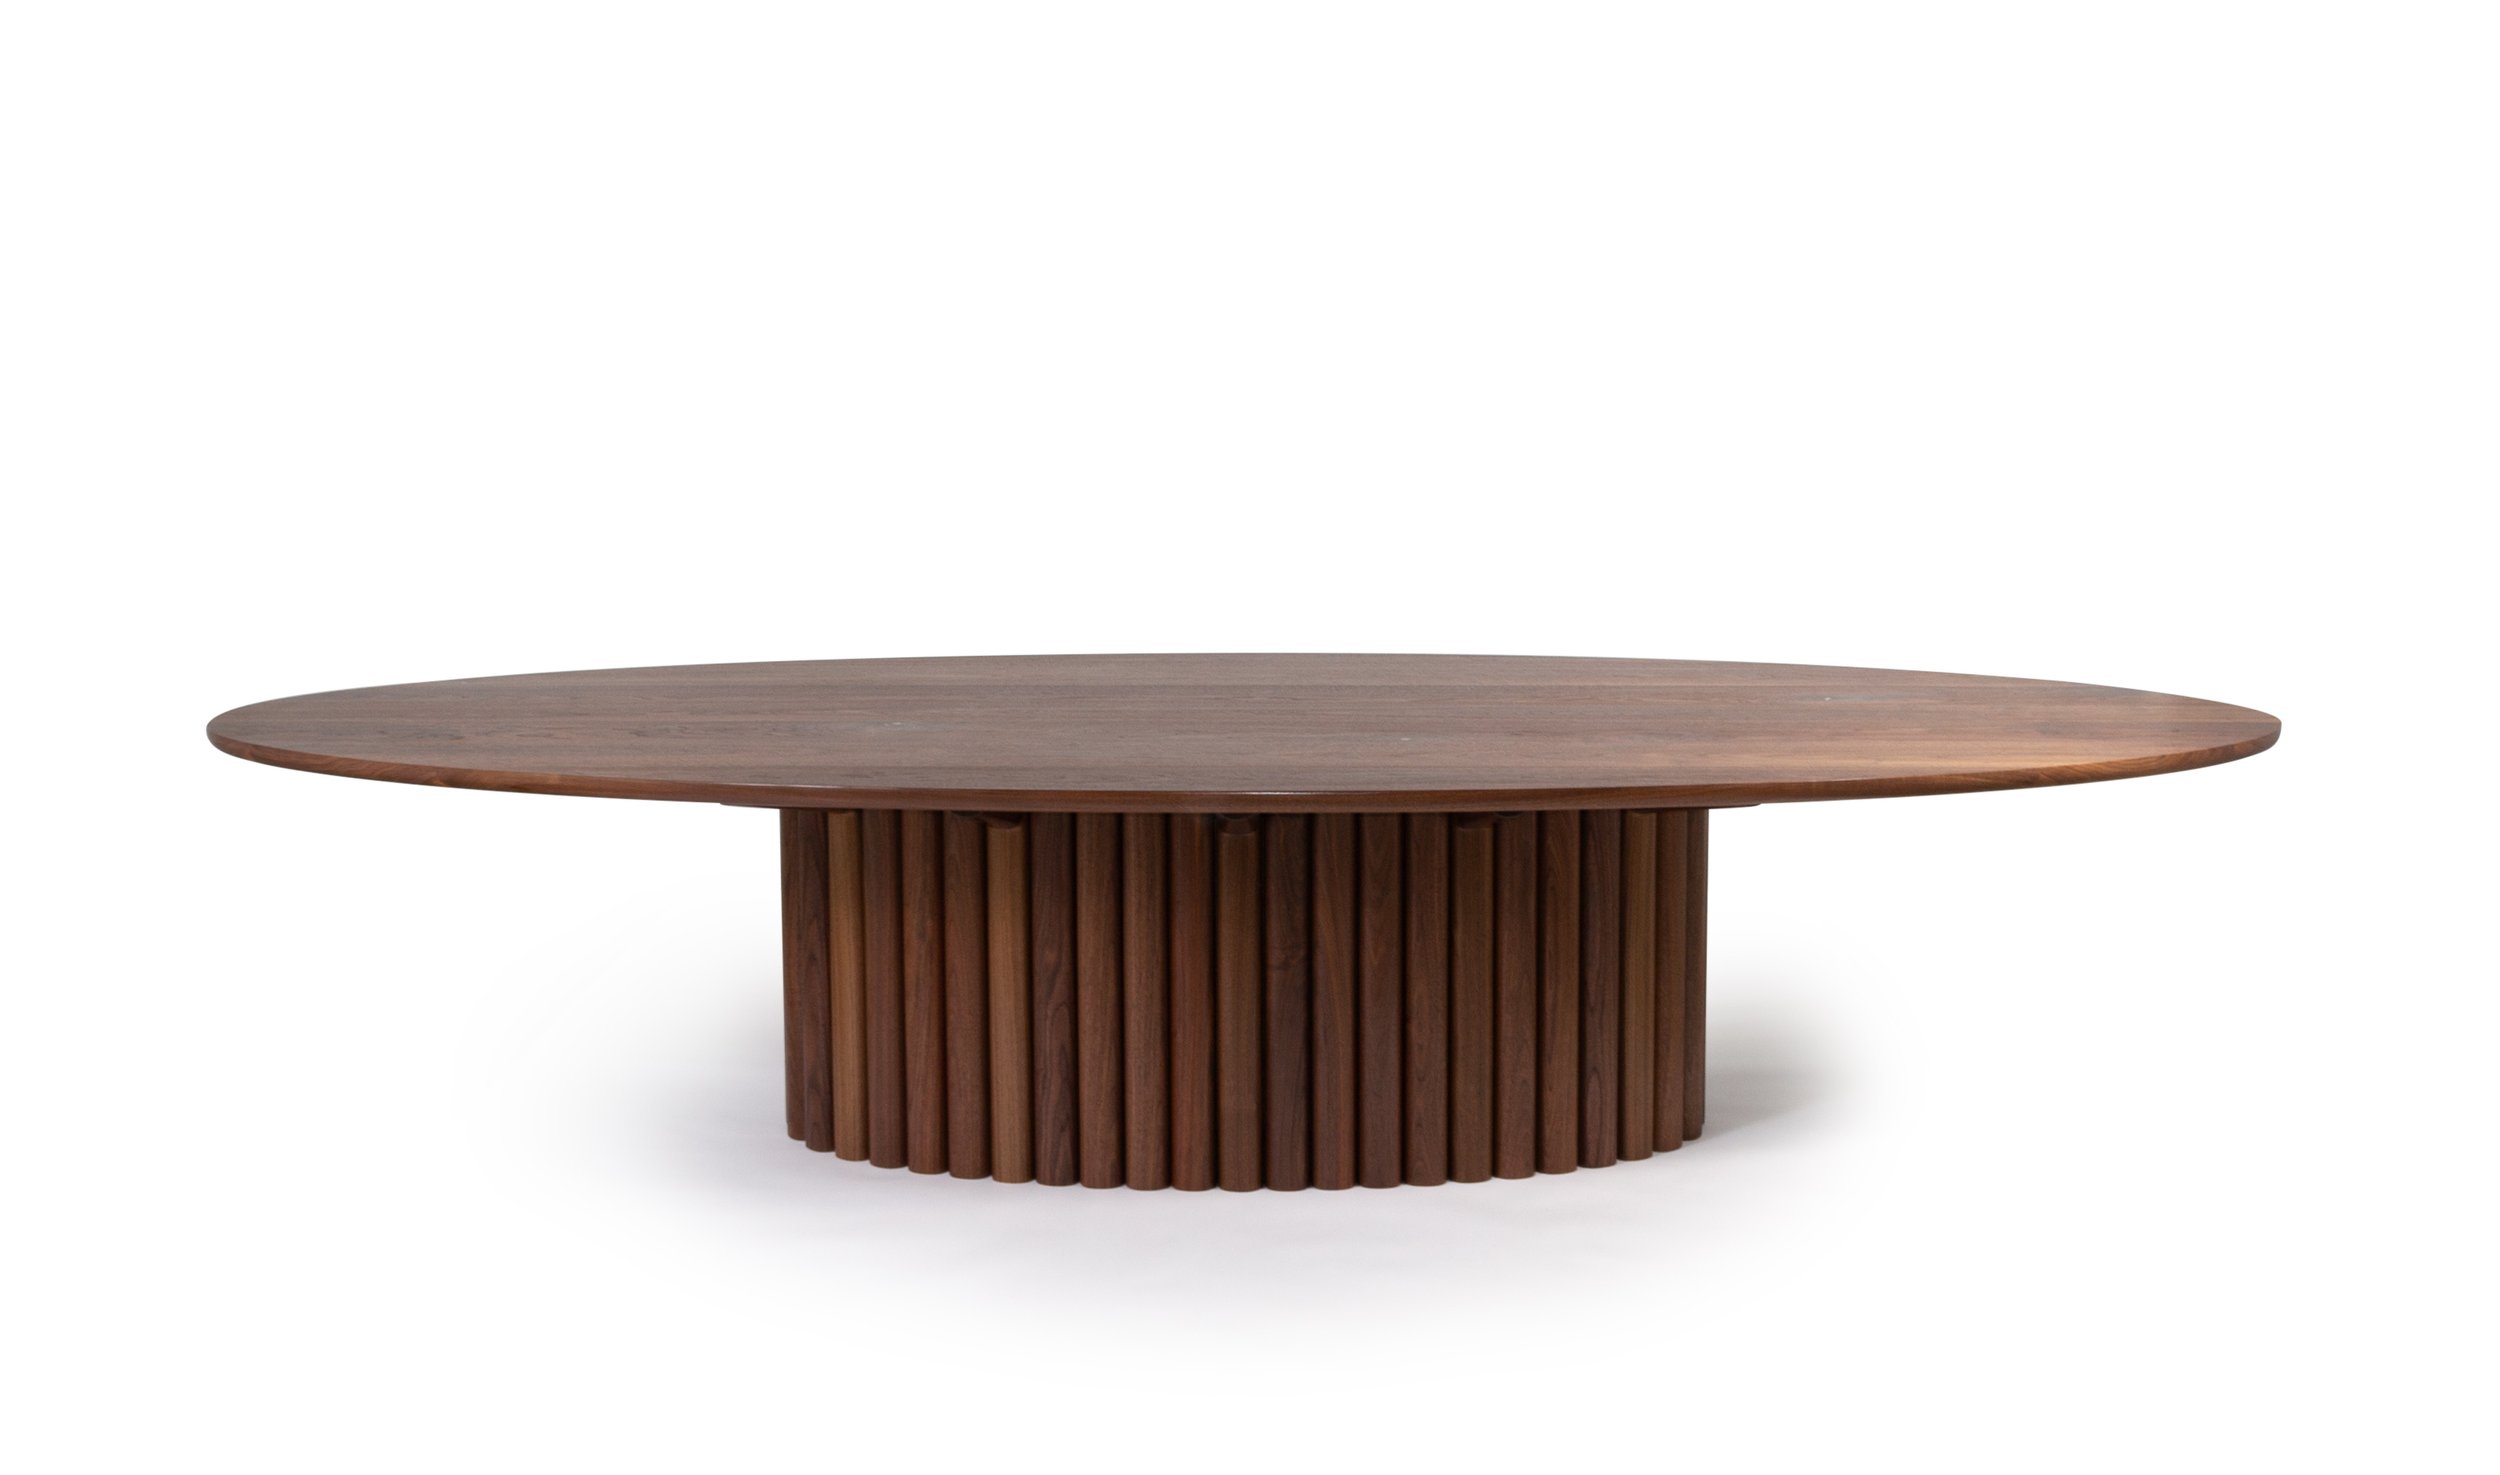 Trey Jones Studio_fluted walnut dining table_6023_cropped.jpg